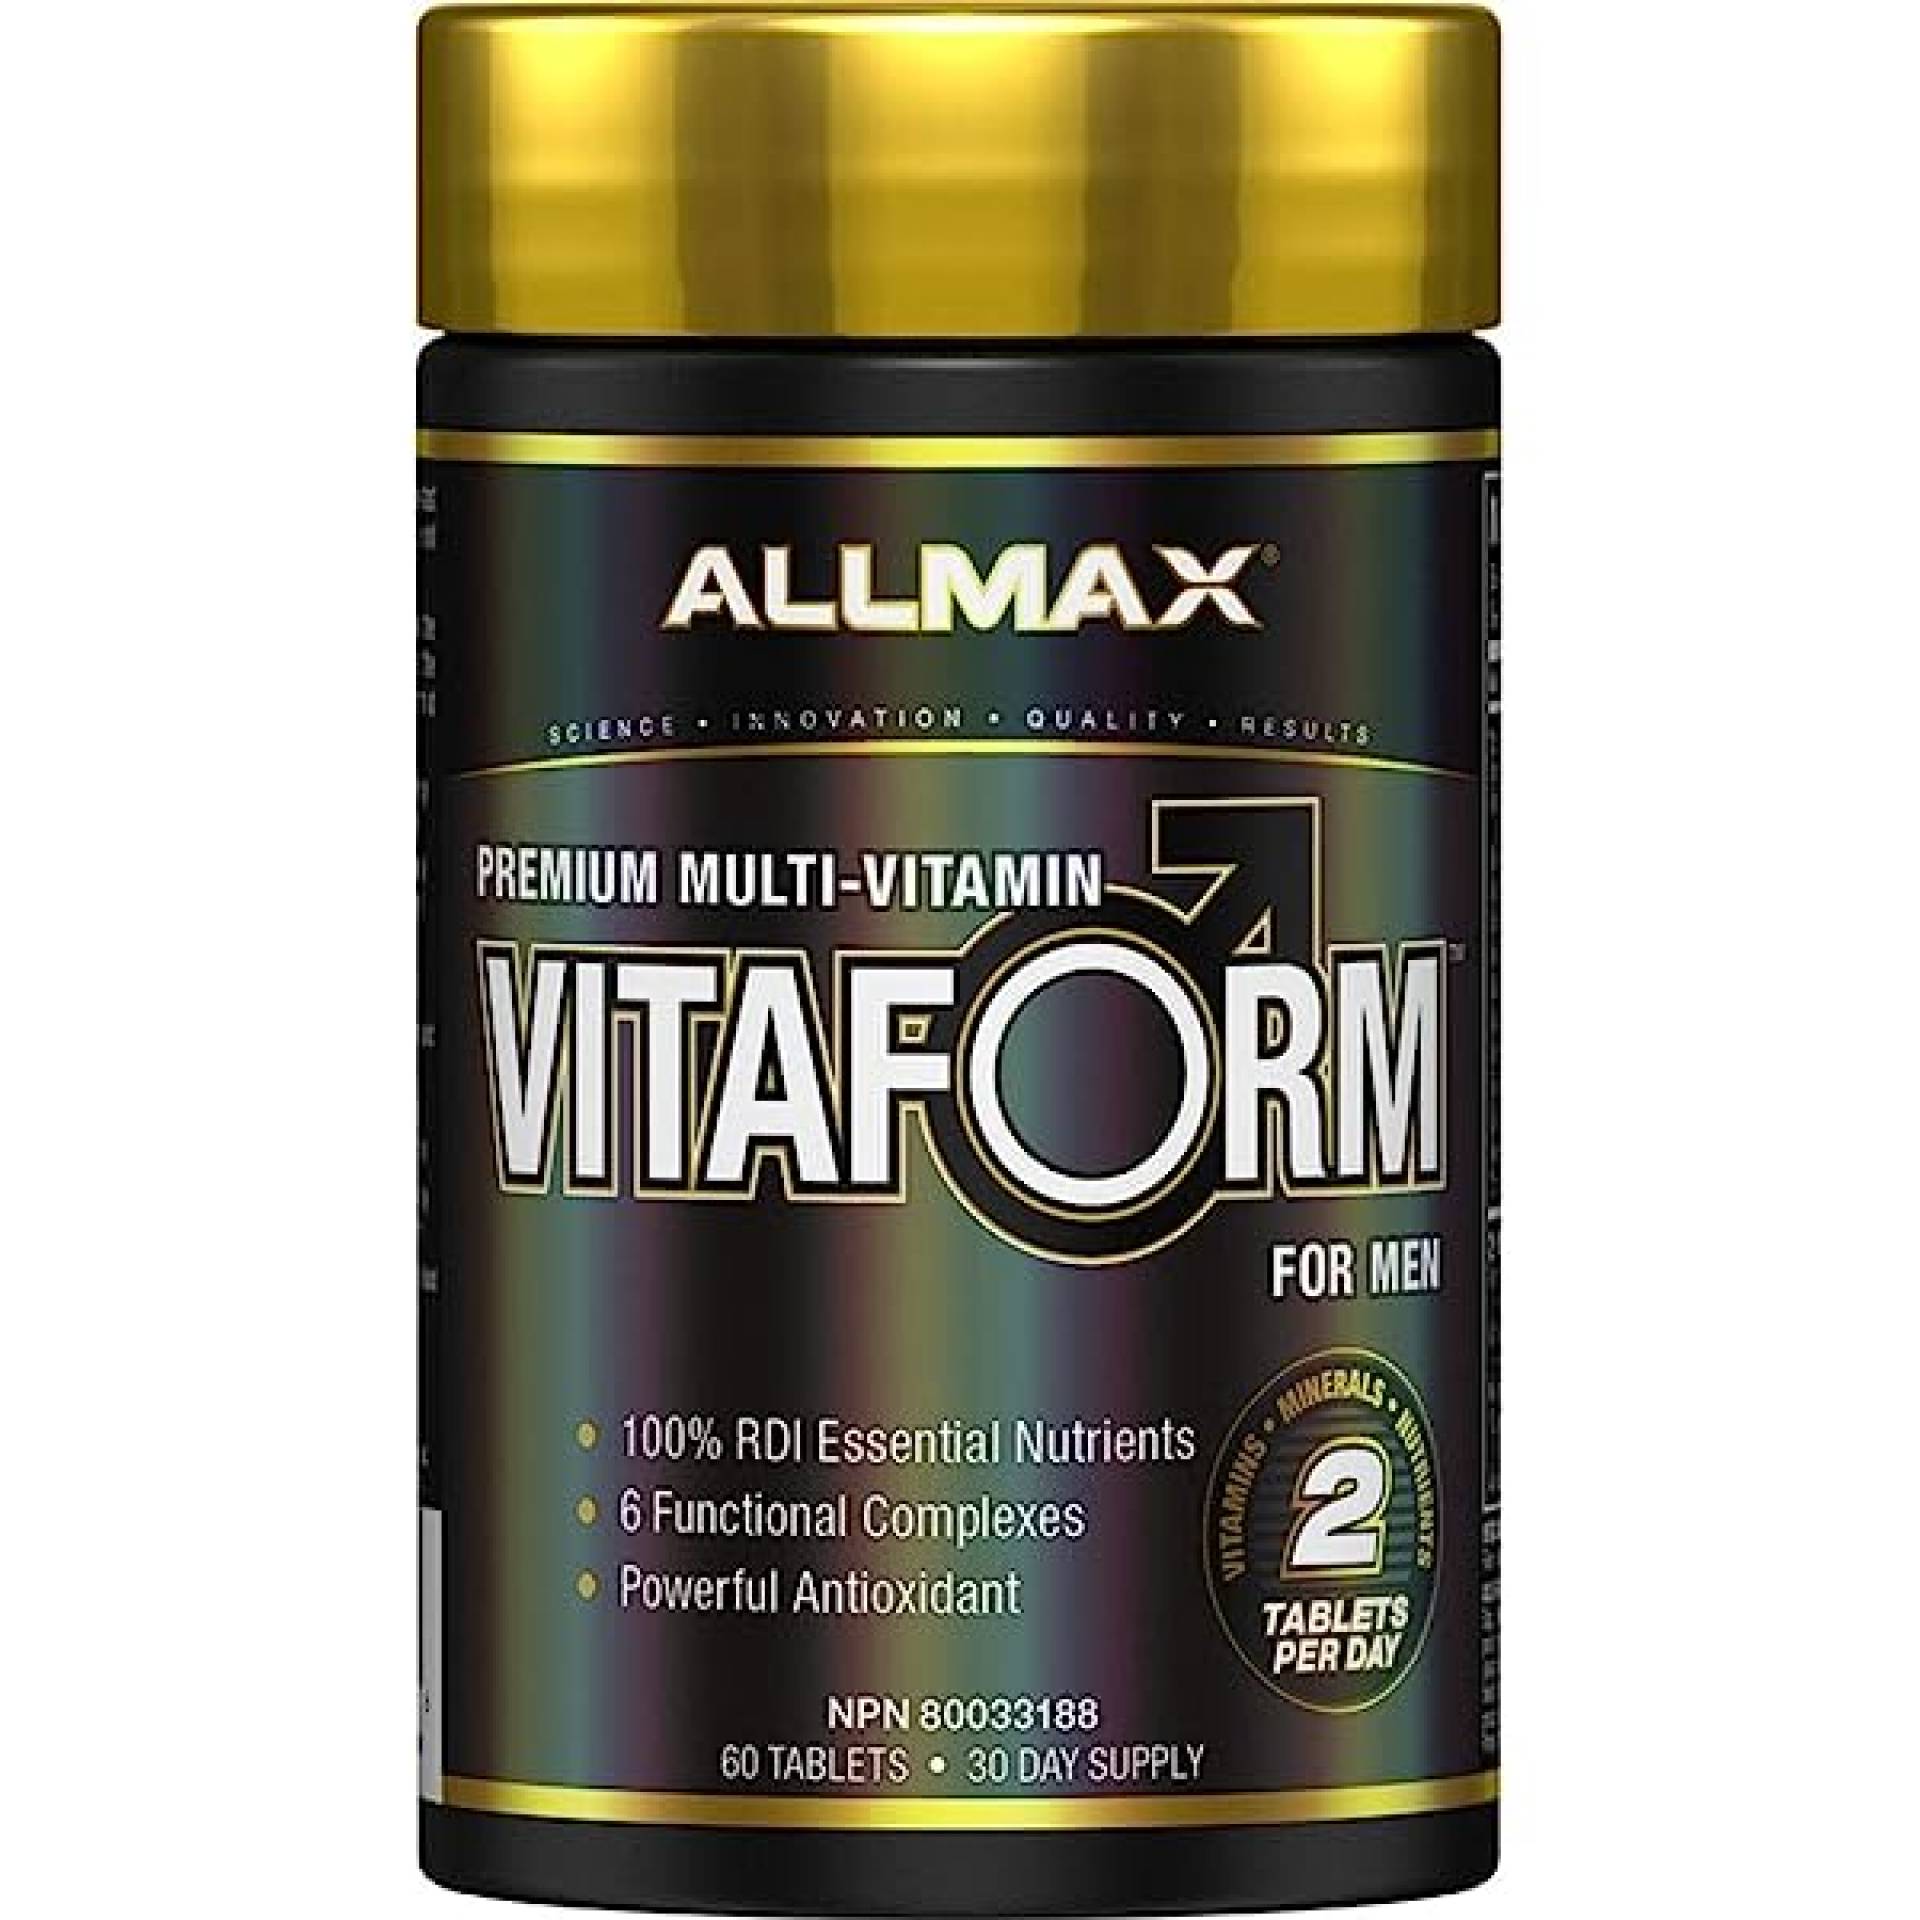 Allmax Vitaform HIS - $17.99